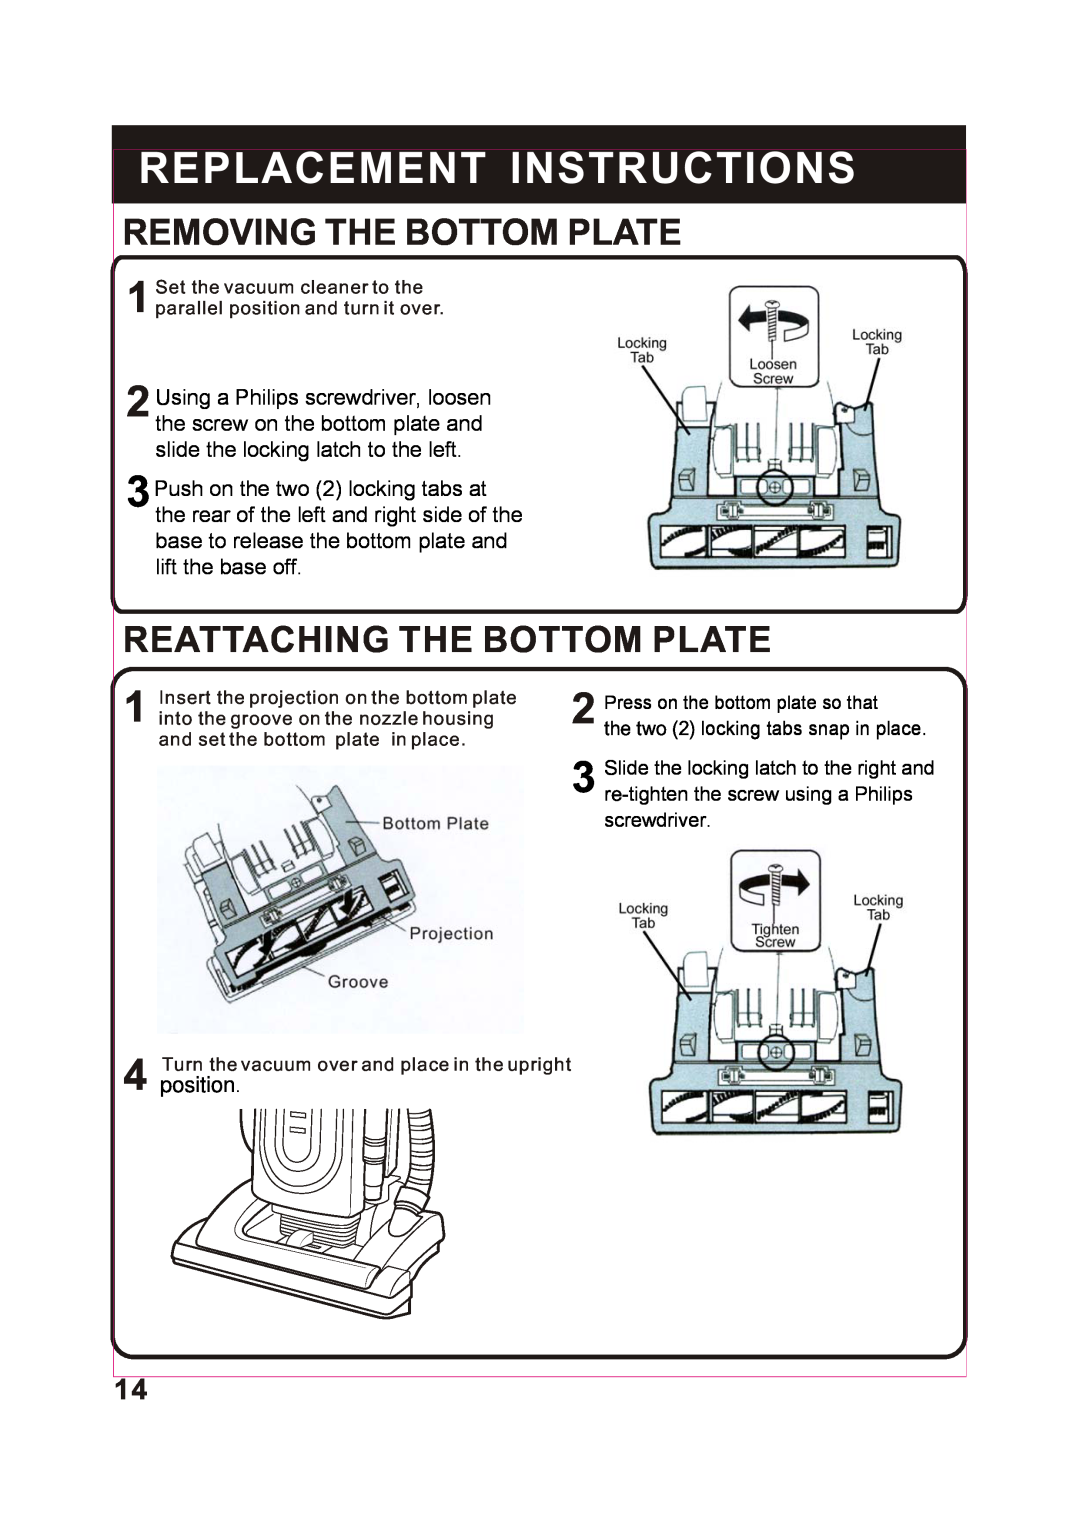 Fantom Vacuum FM743 Removing The Bottom Plate, Reattaching The Bottom Plate, Replacement Instructions, screwdriver 